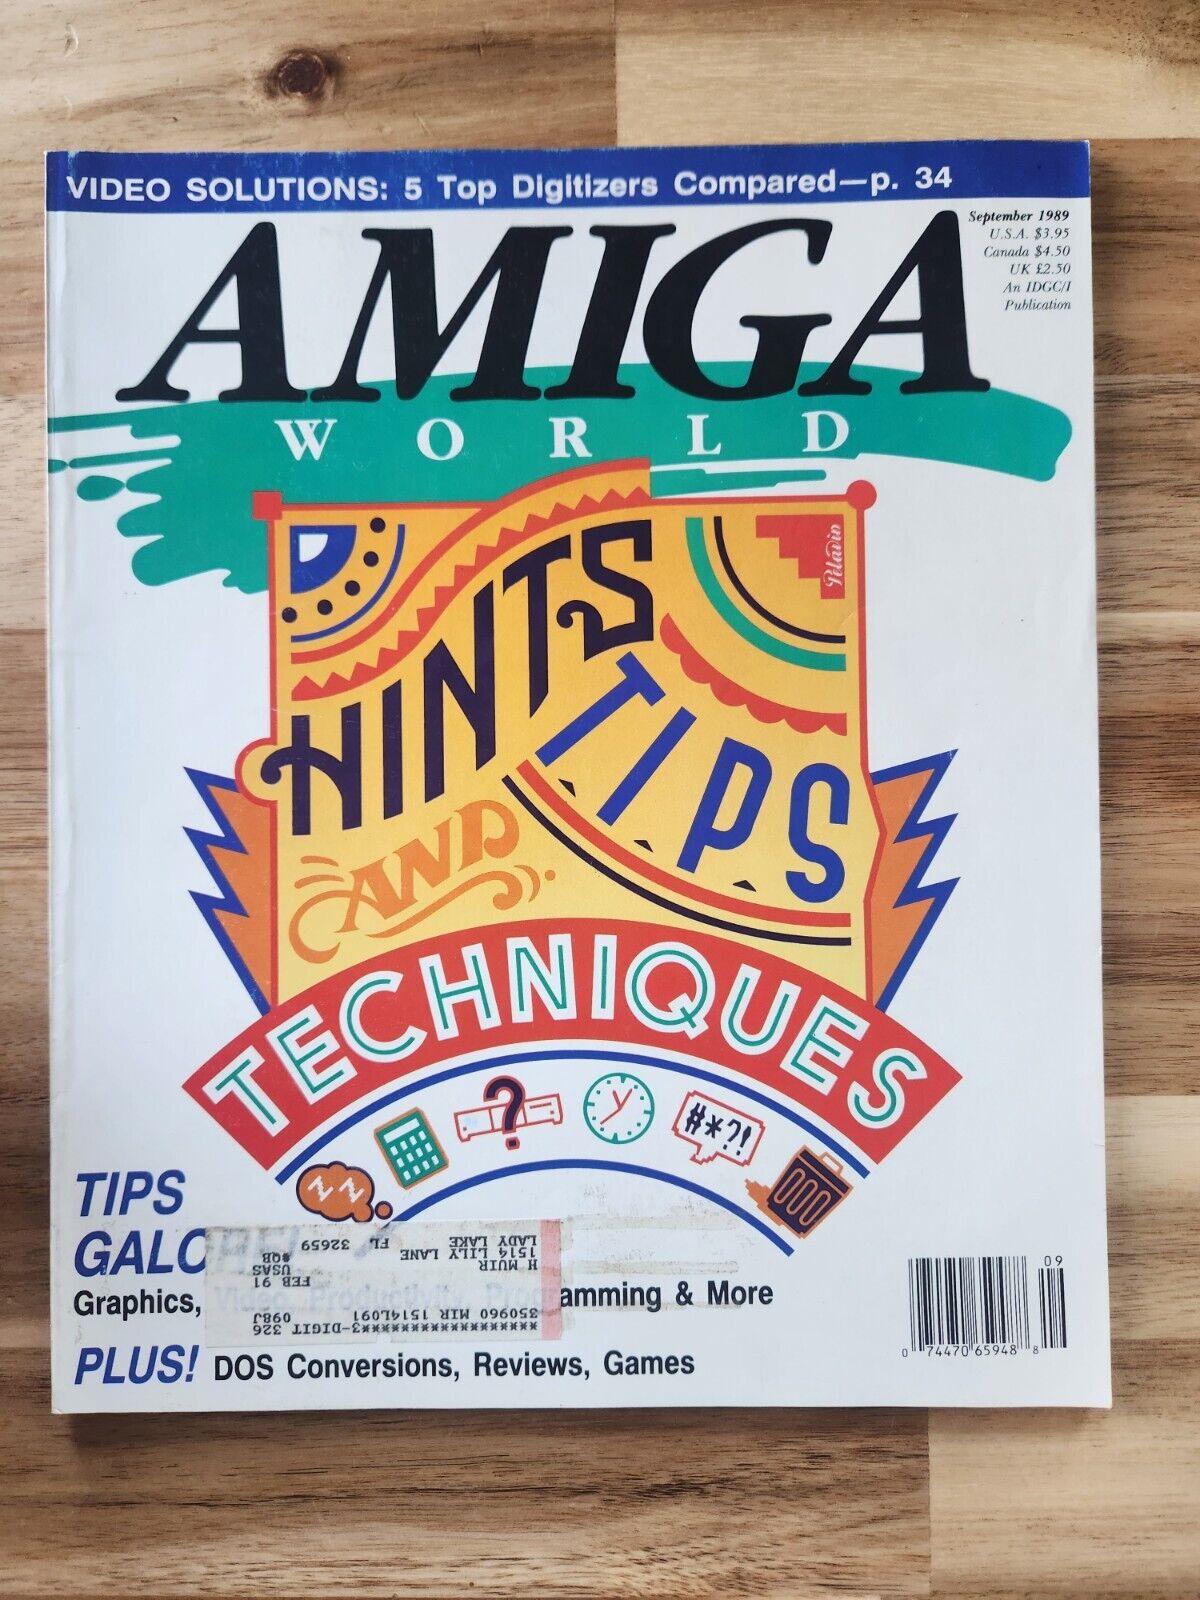 Vintage Amiga World Vol 5 Number 9 September 1989 Magazine, Computer Programming